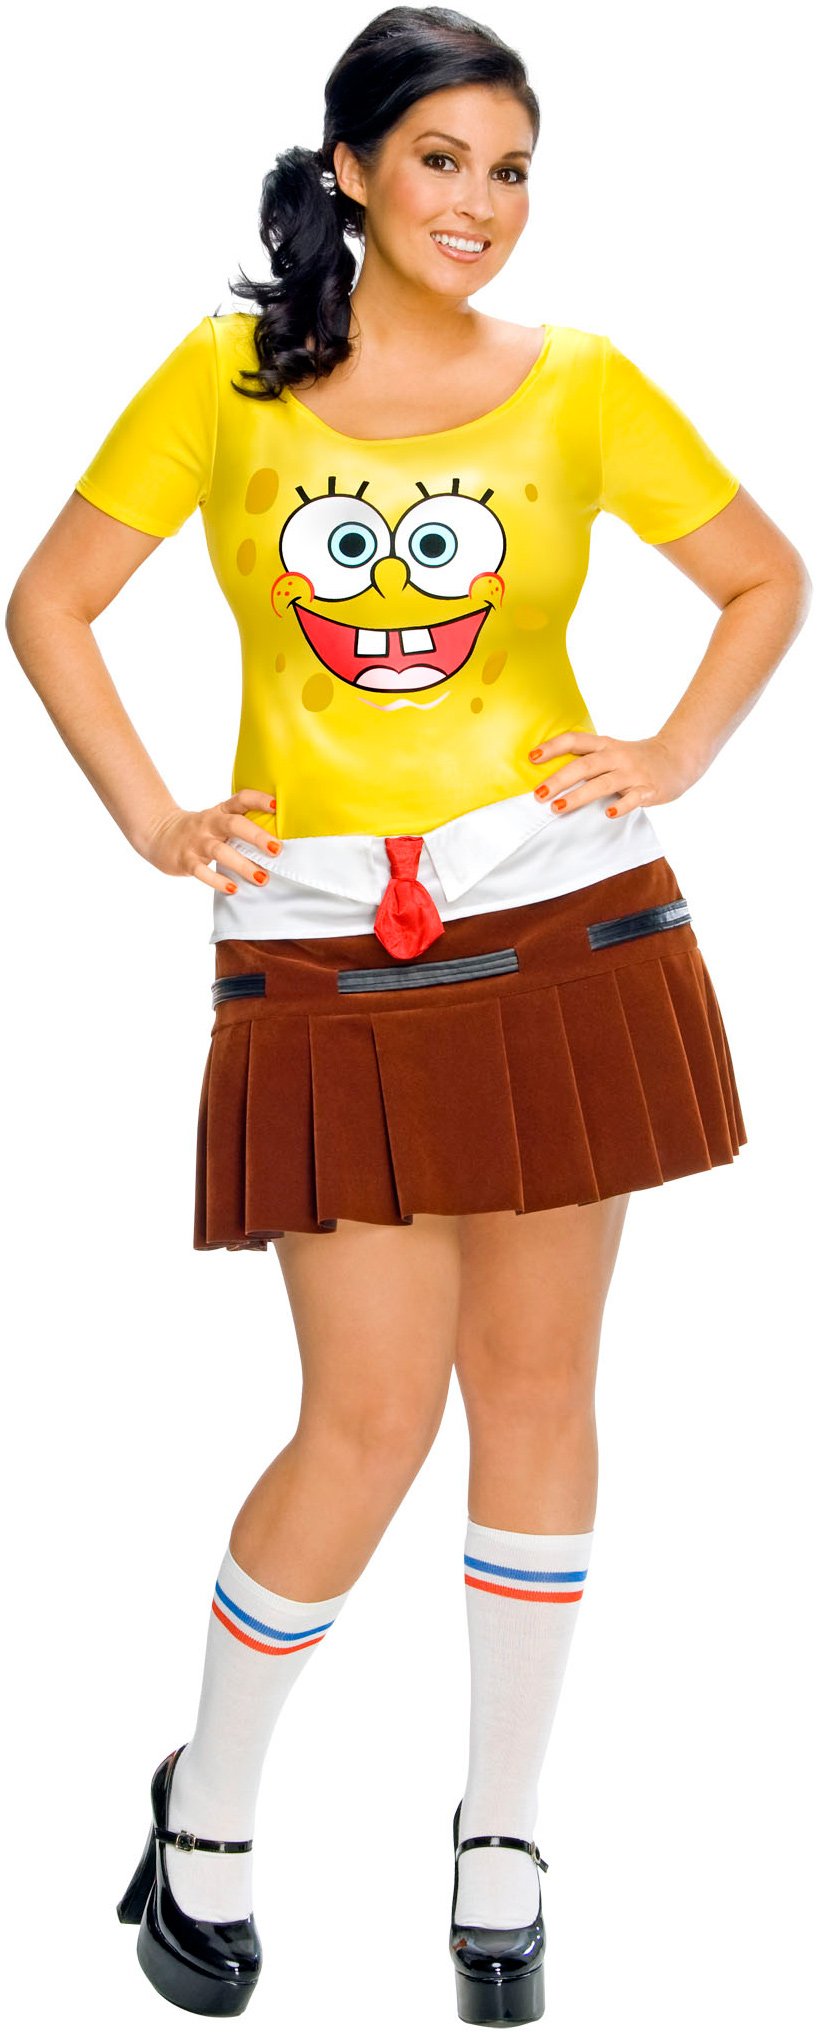 Spongebob Squarepants - Spongebabe Plus Adult Costume